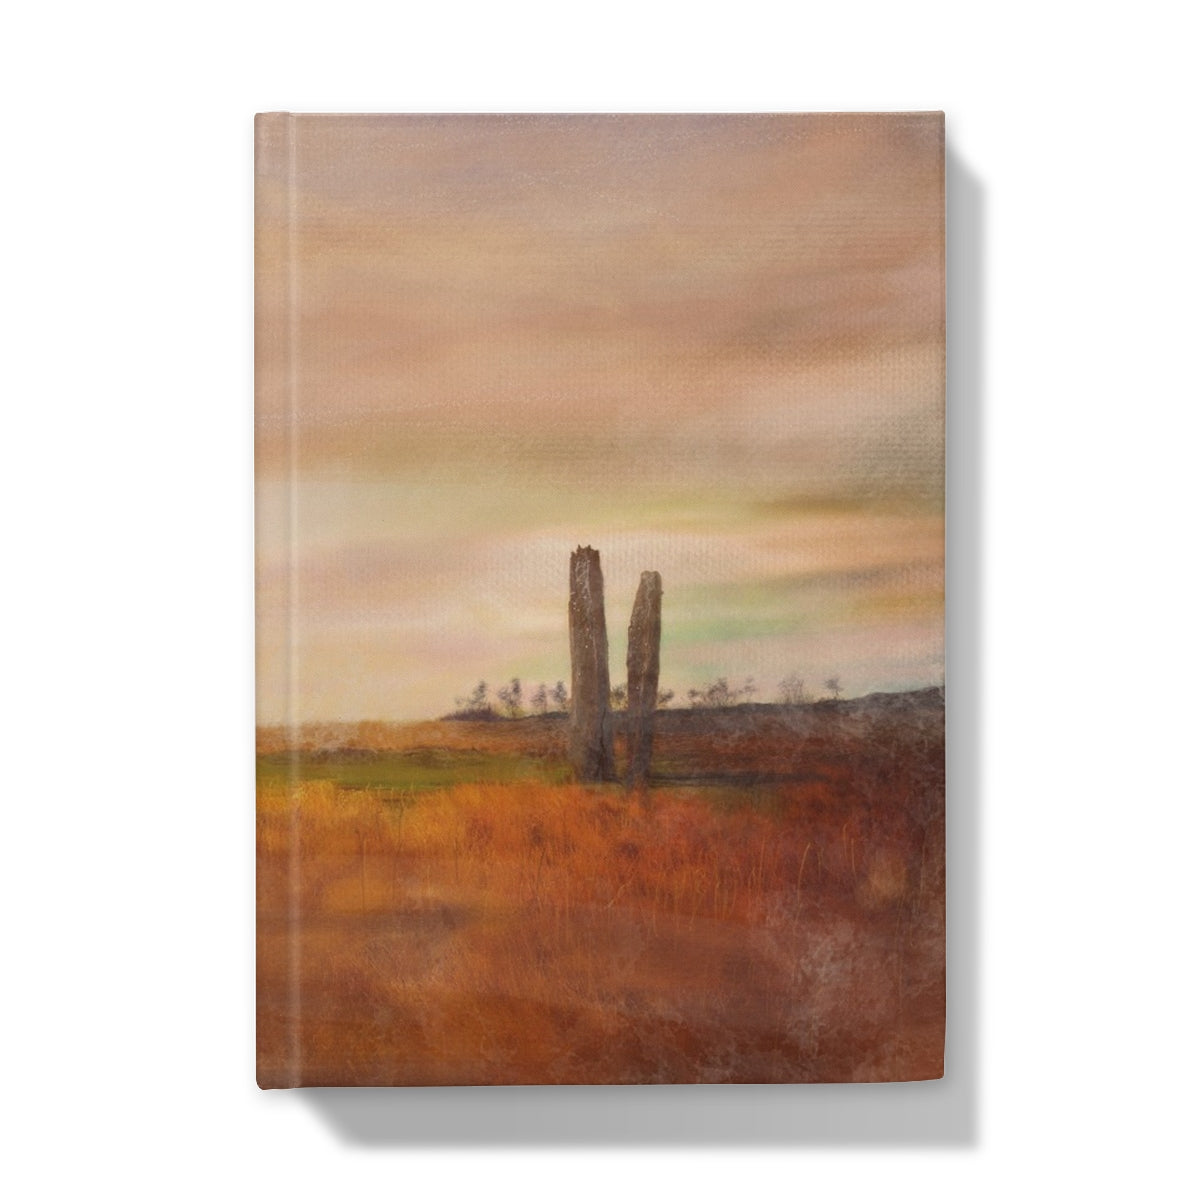 Machrie Moor Arran Art Gifts Hardback Journal-Journals & Notebooks-Arran Art Gallery-A5-Lined-Paintings, Prints, Homeware, Art Gifts From Scotland By Scottish Artist Kevin Hunter